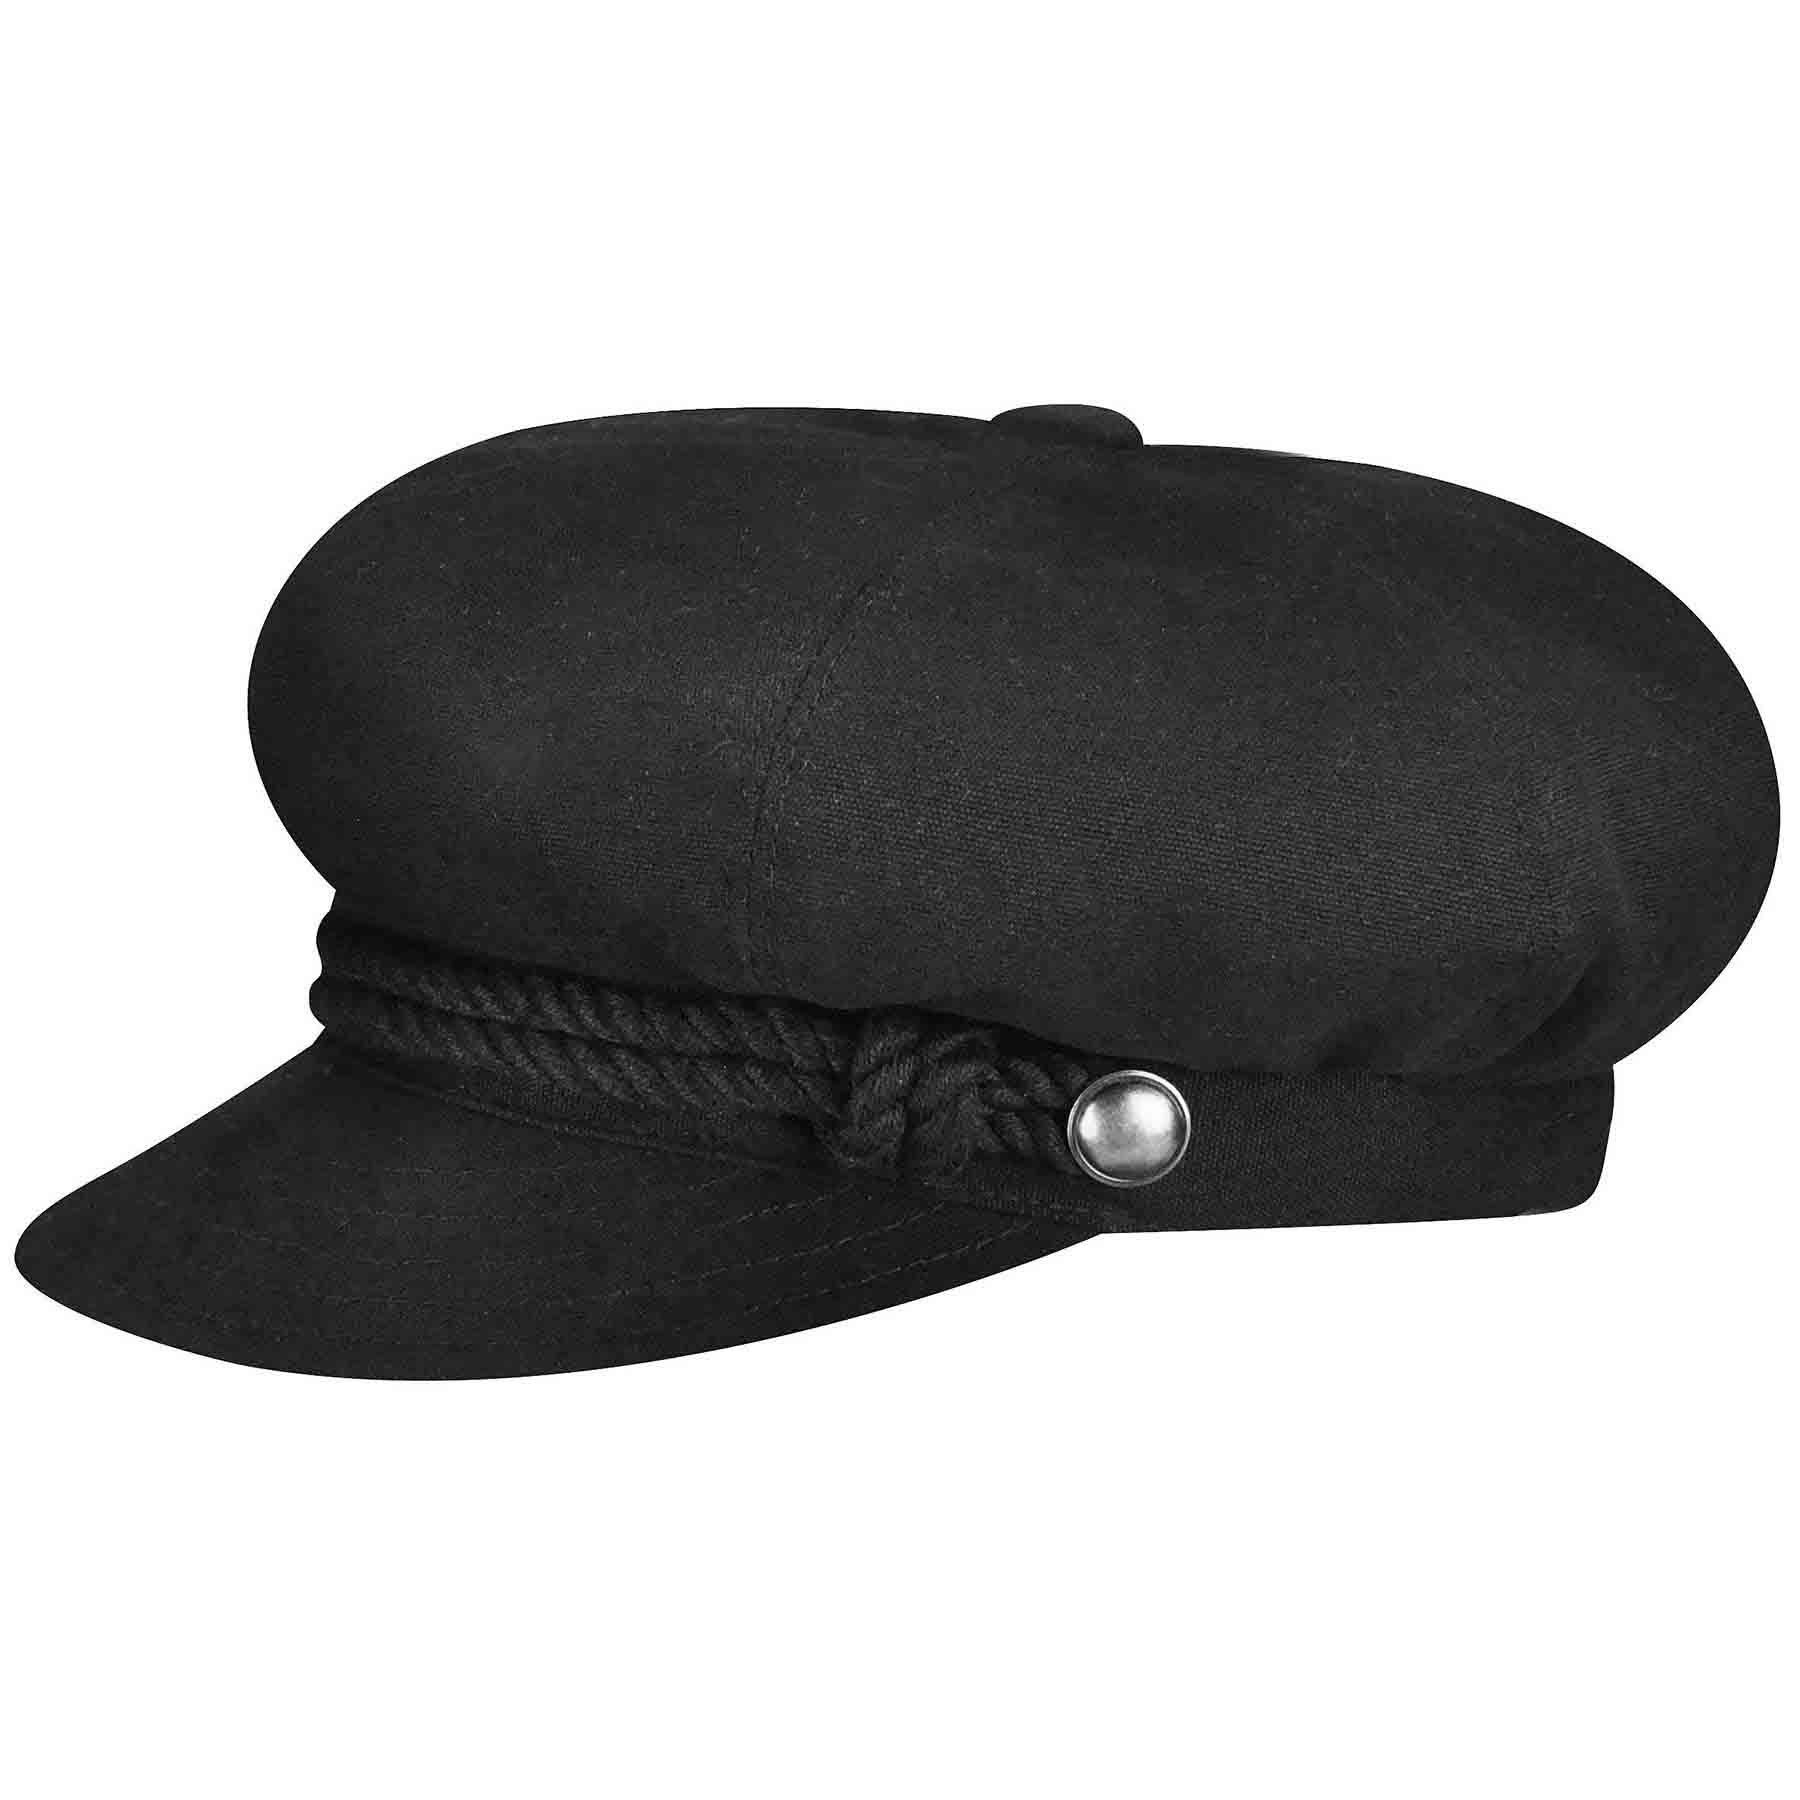 Statistical break up eyebrow כובע קסקט לנשים דייגים בטמר בצבע שחור - כובעלה כובעי מותג לגברים ונשים